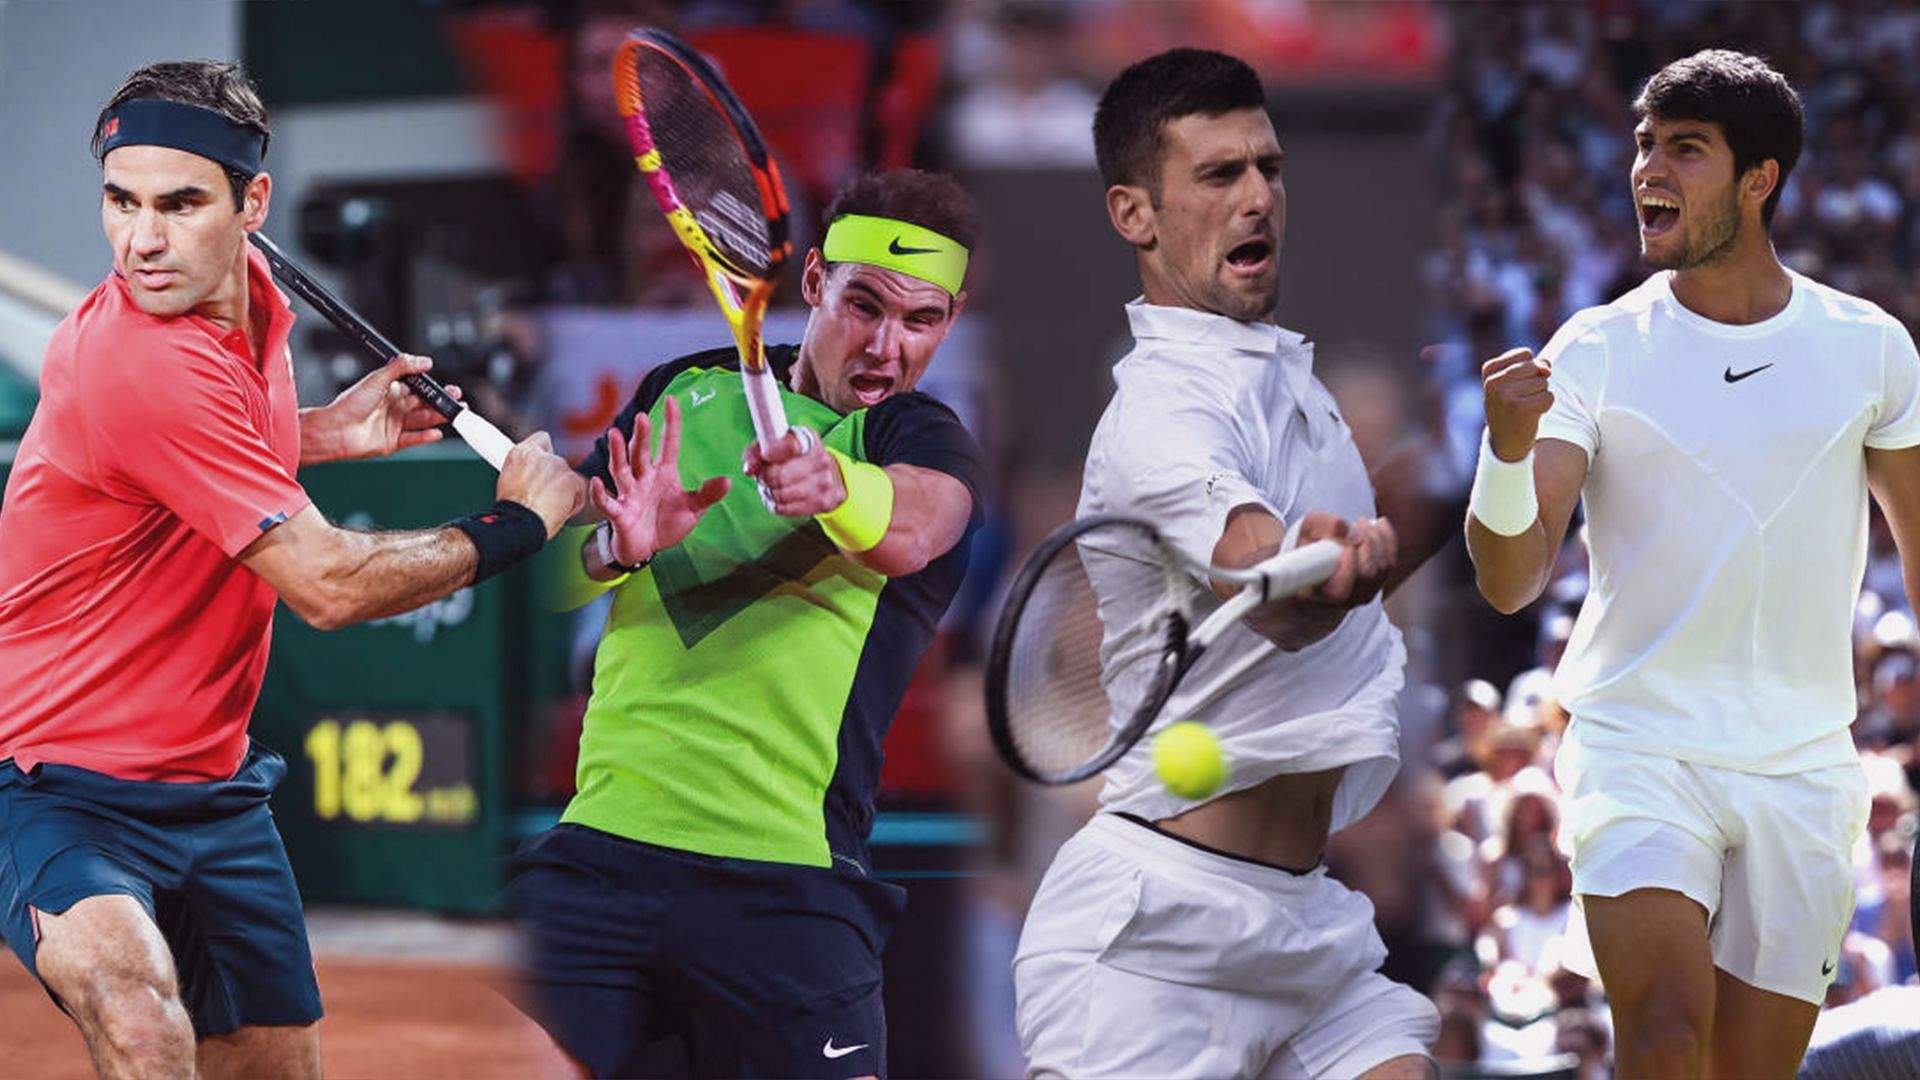 Novak Djokovic, Roger Federer, Rafael Nadal and Carlos Alcaraz all in one frame